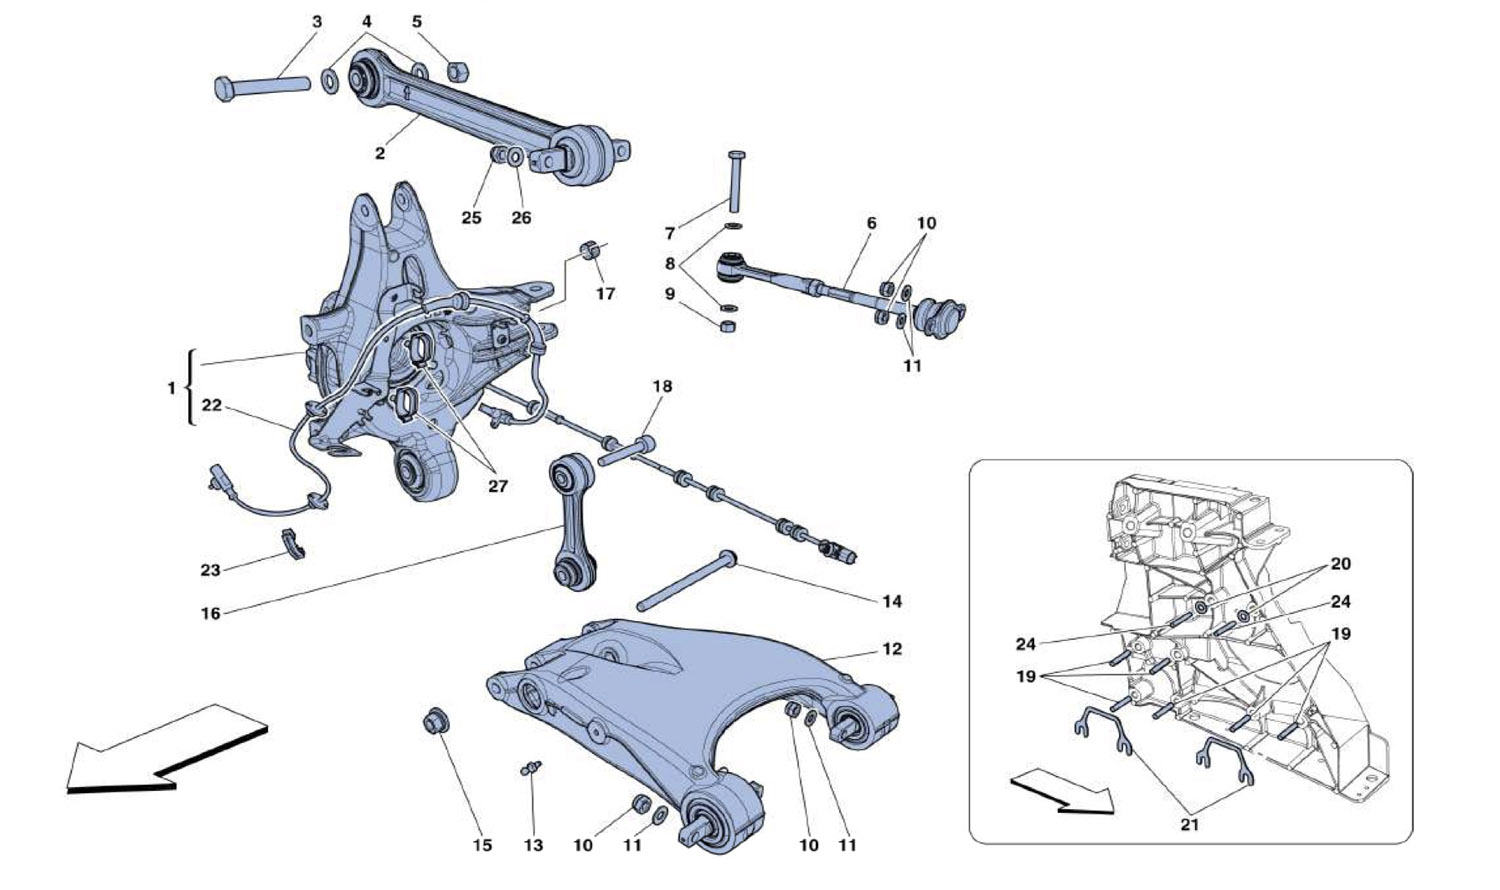 Schematic: Rear Suspension - Wishbones